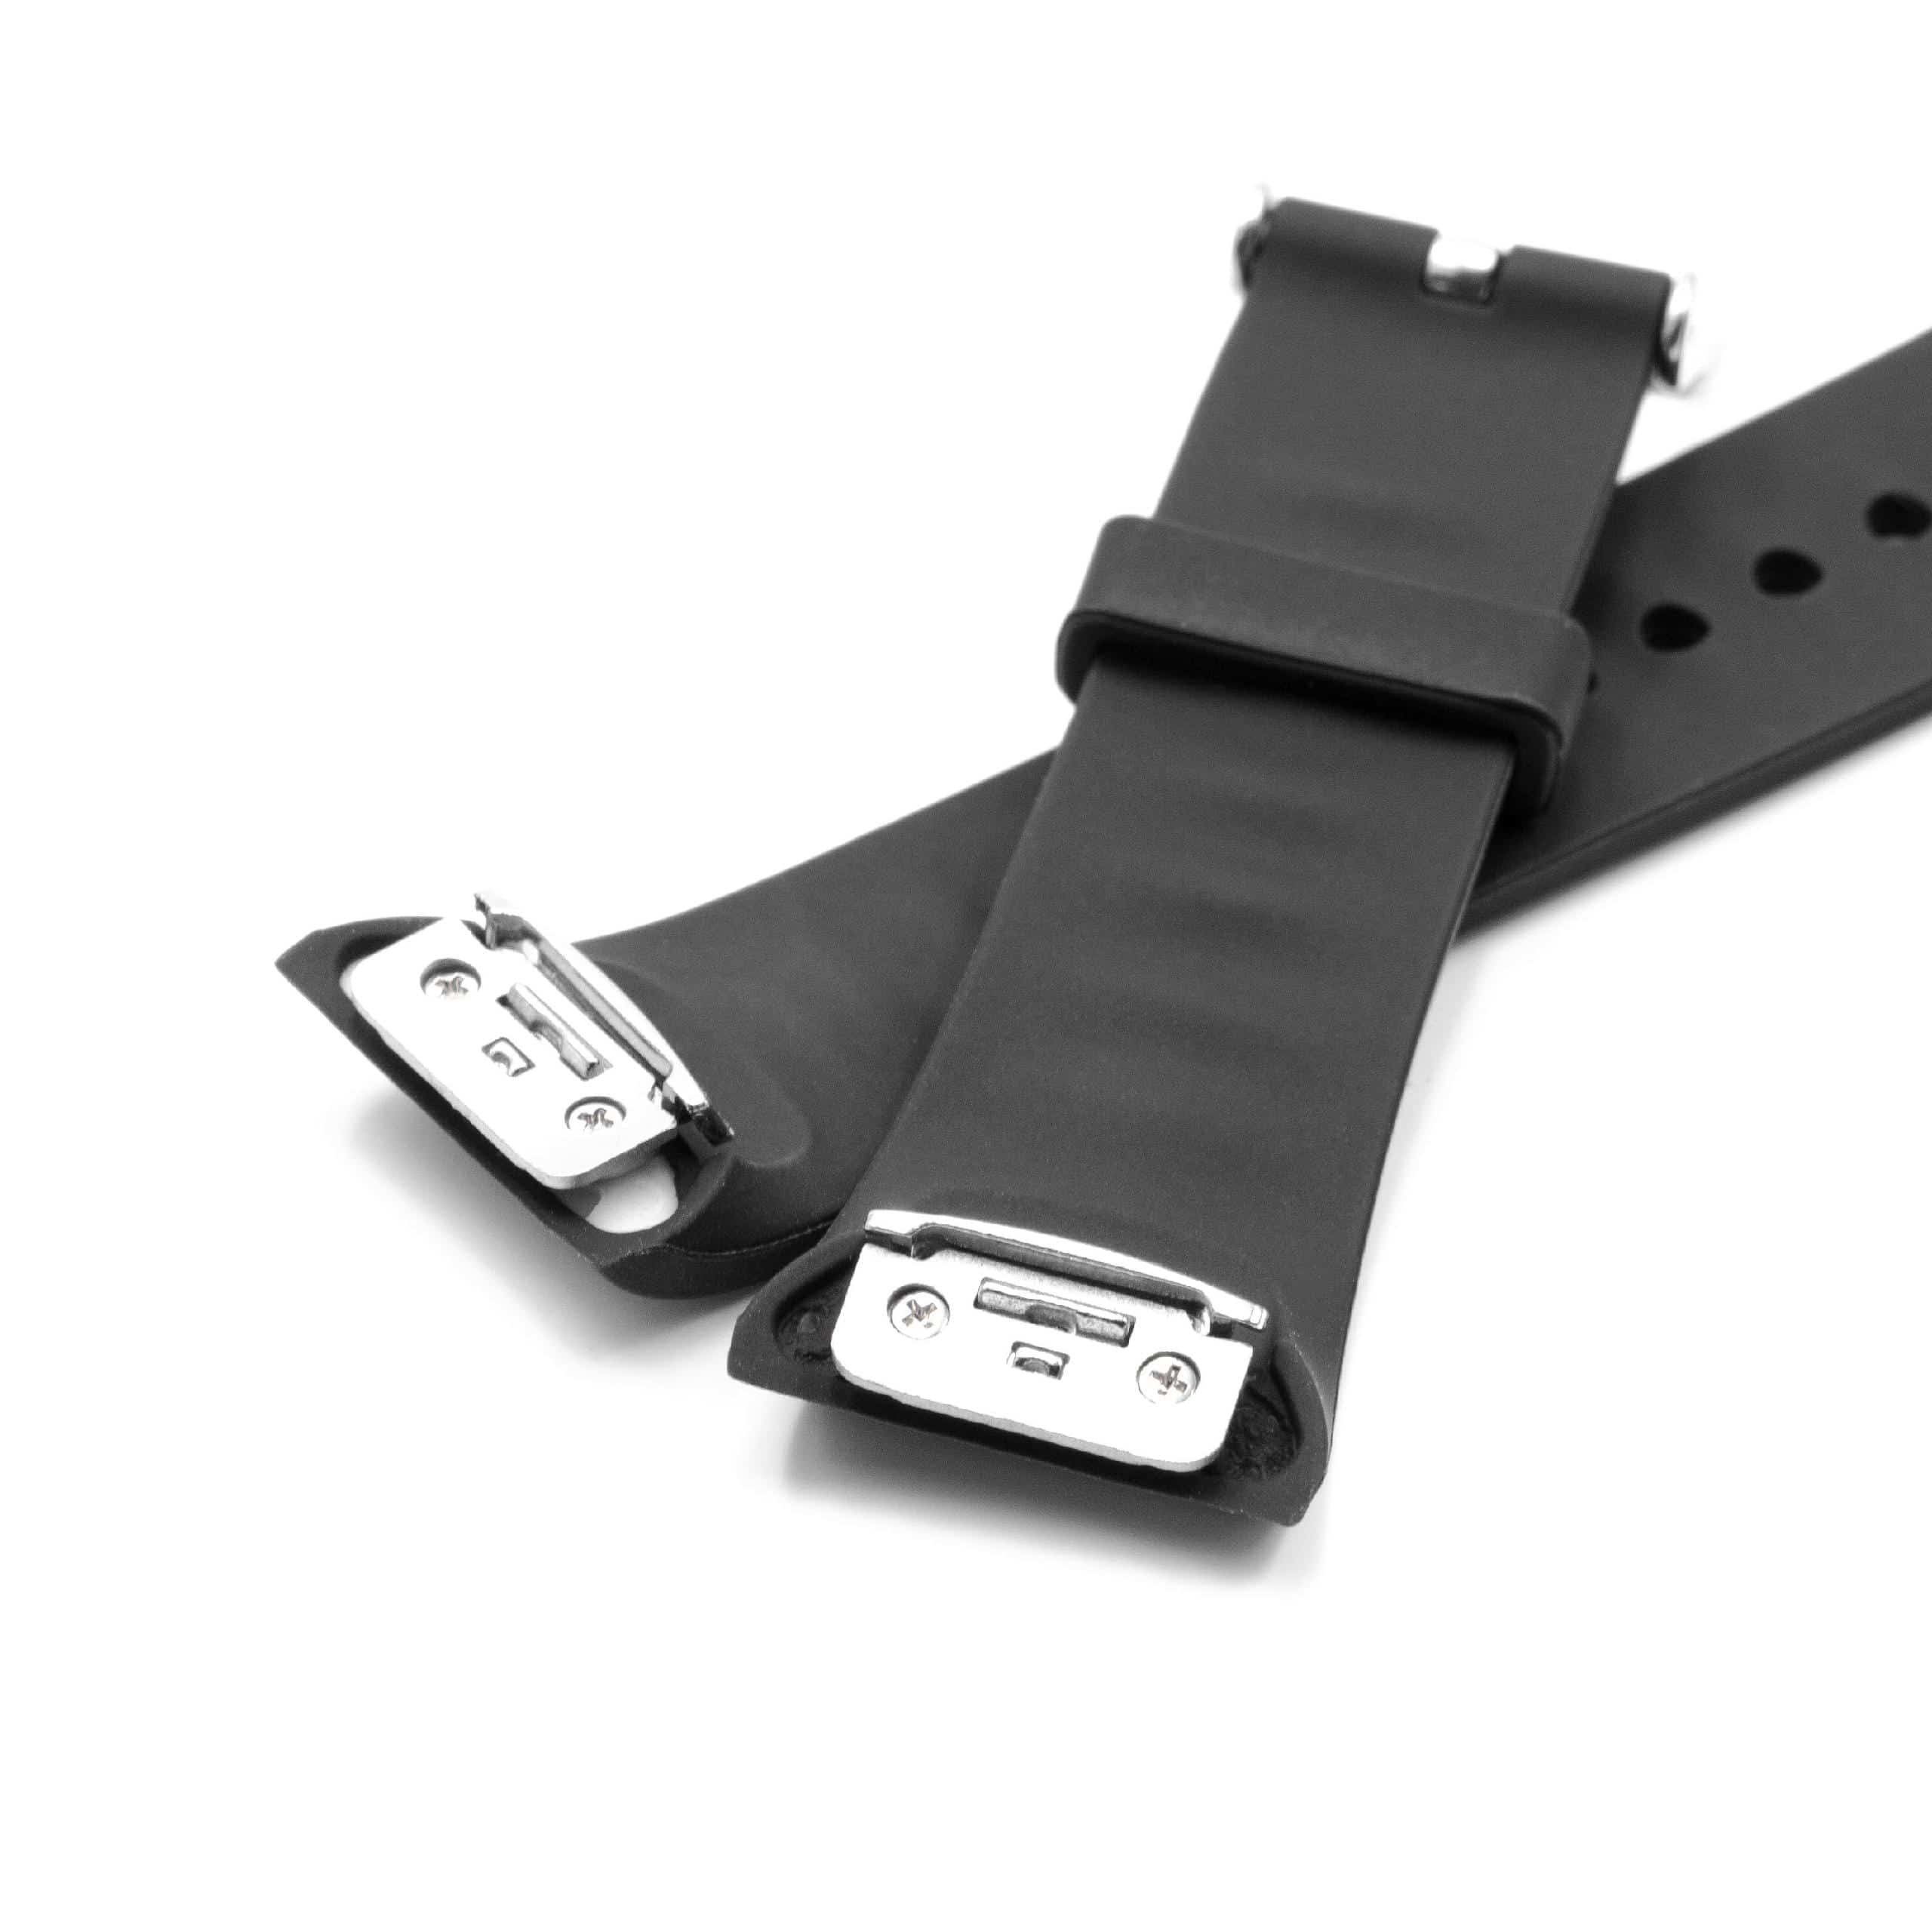 correa para Samsung Gear smartwatch - largo 11,7 + 7,6 cm, ancho 18,5 mm, silicona, negro